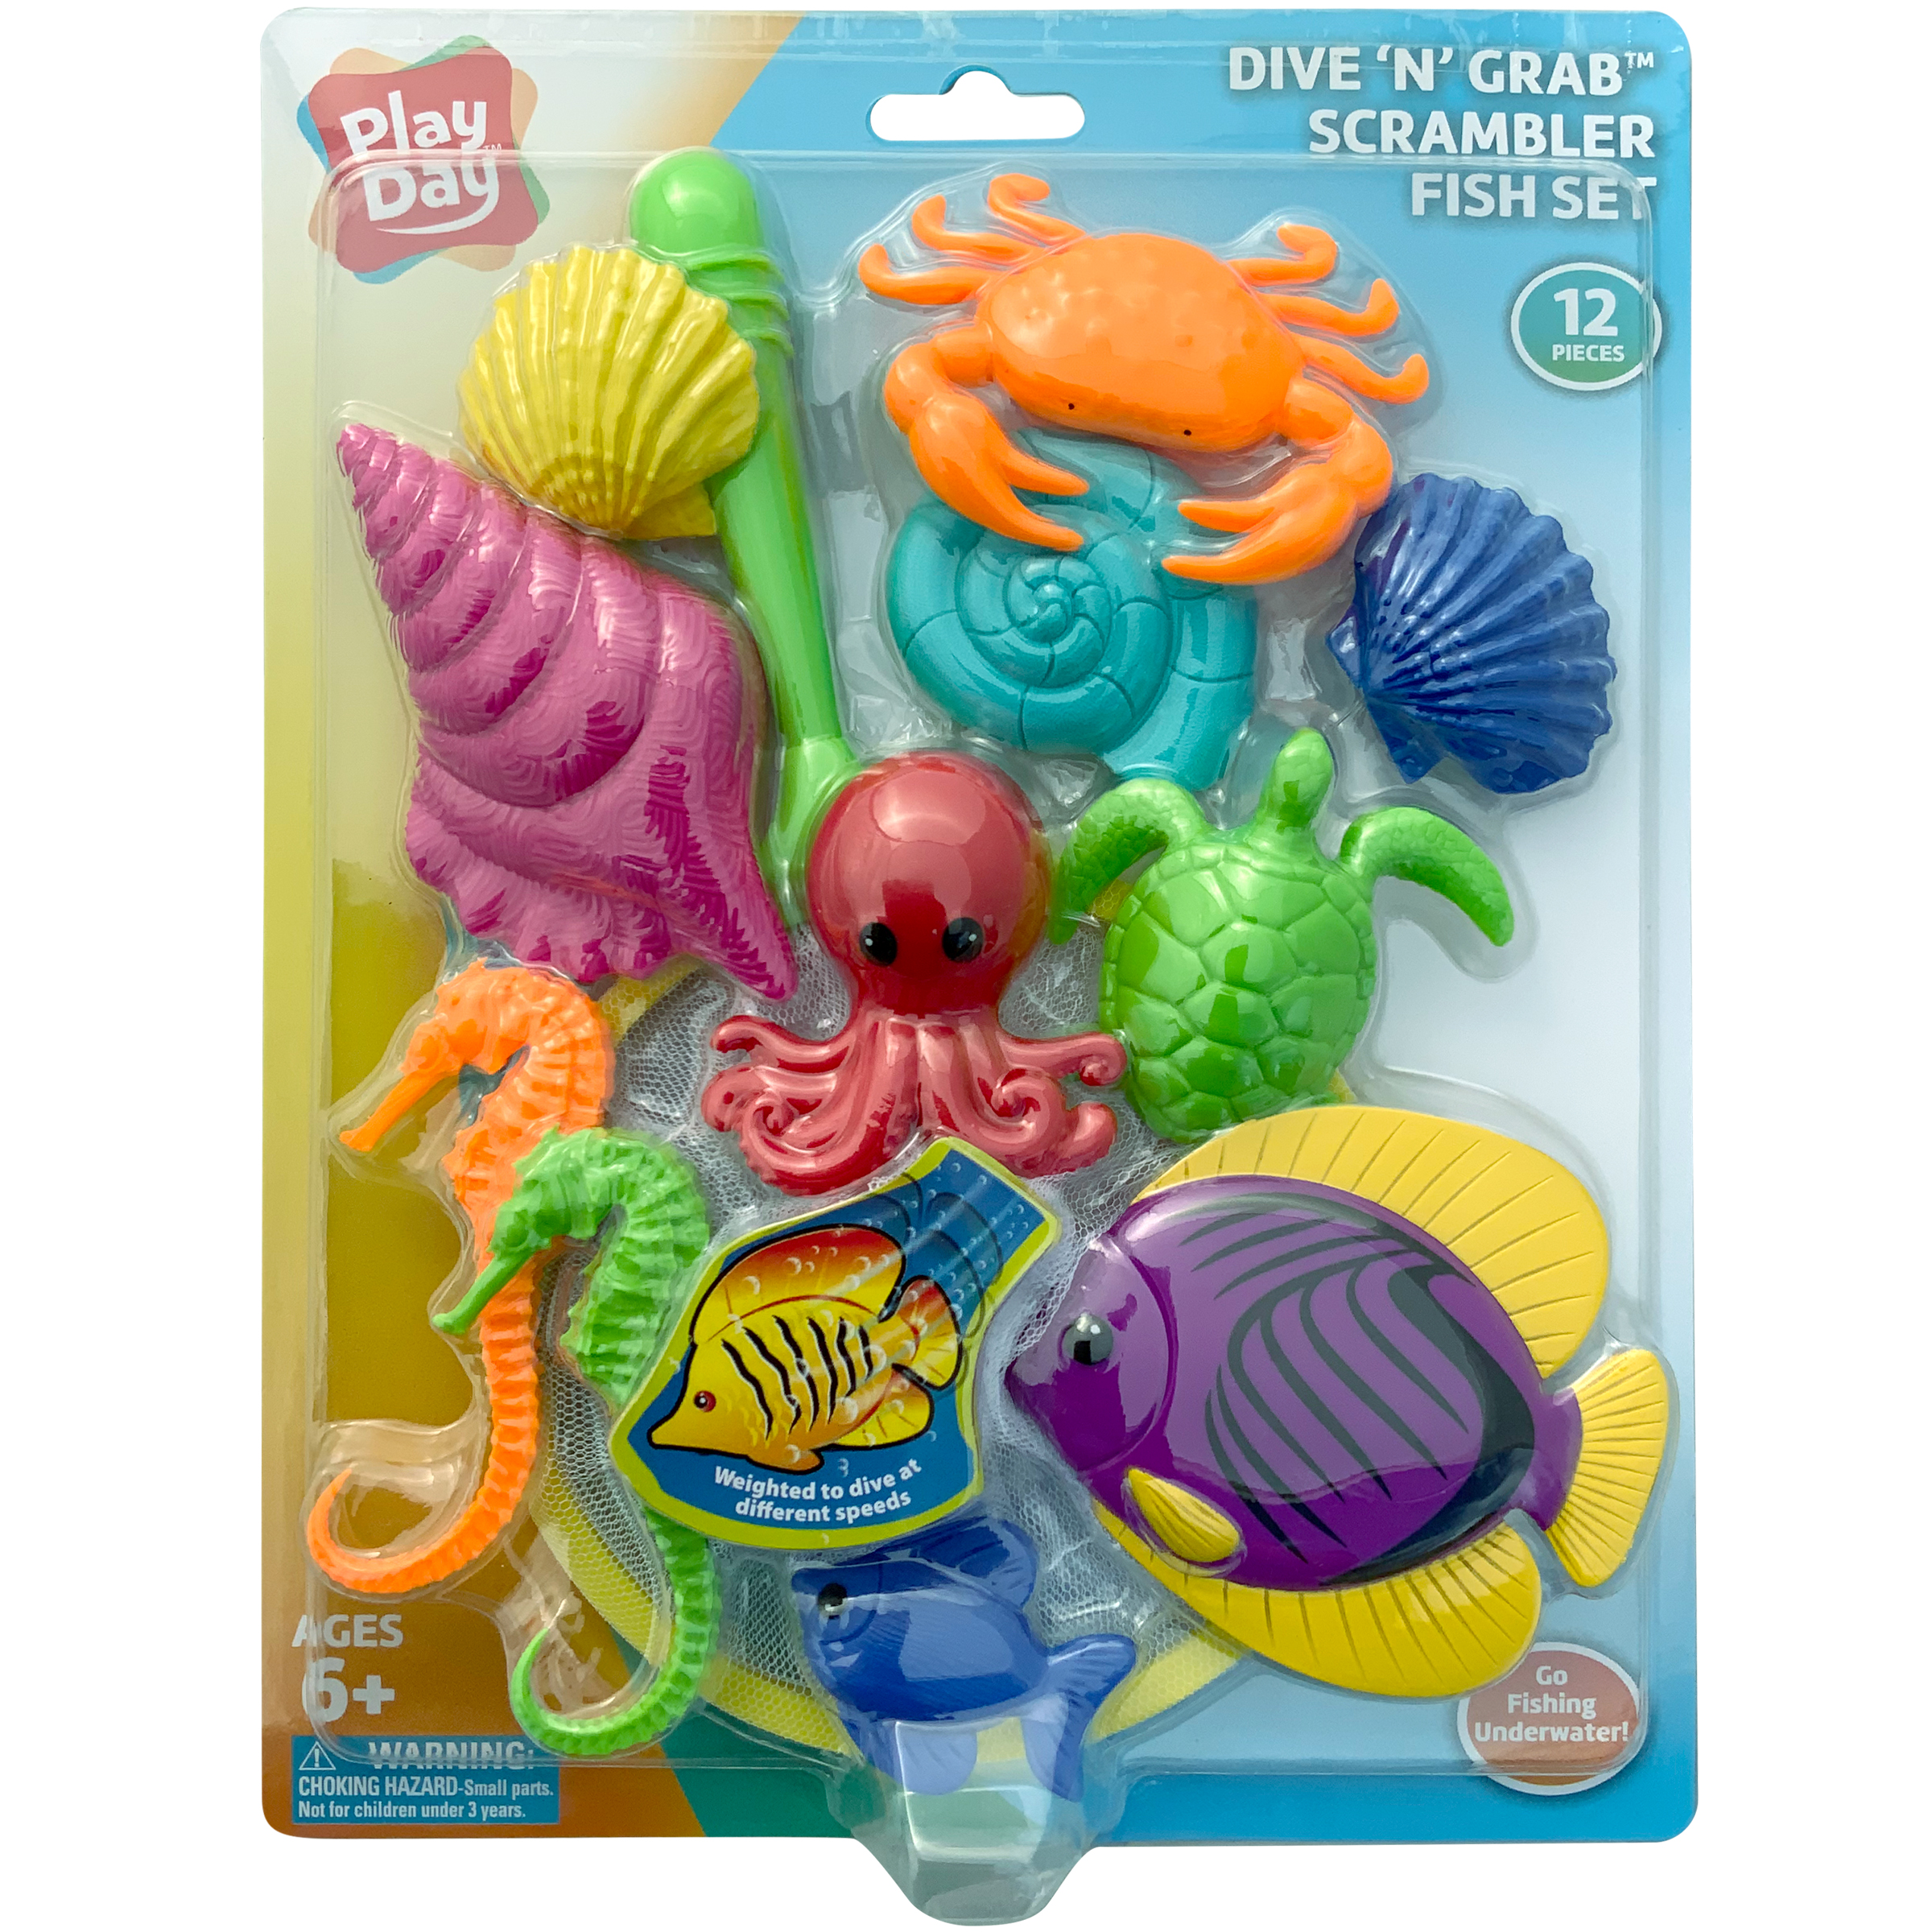 Play Day Dive 'N Grab Scrambler Fish Set, 12 Piece Pool Toy - image 4 of 4